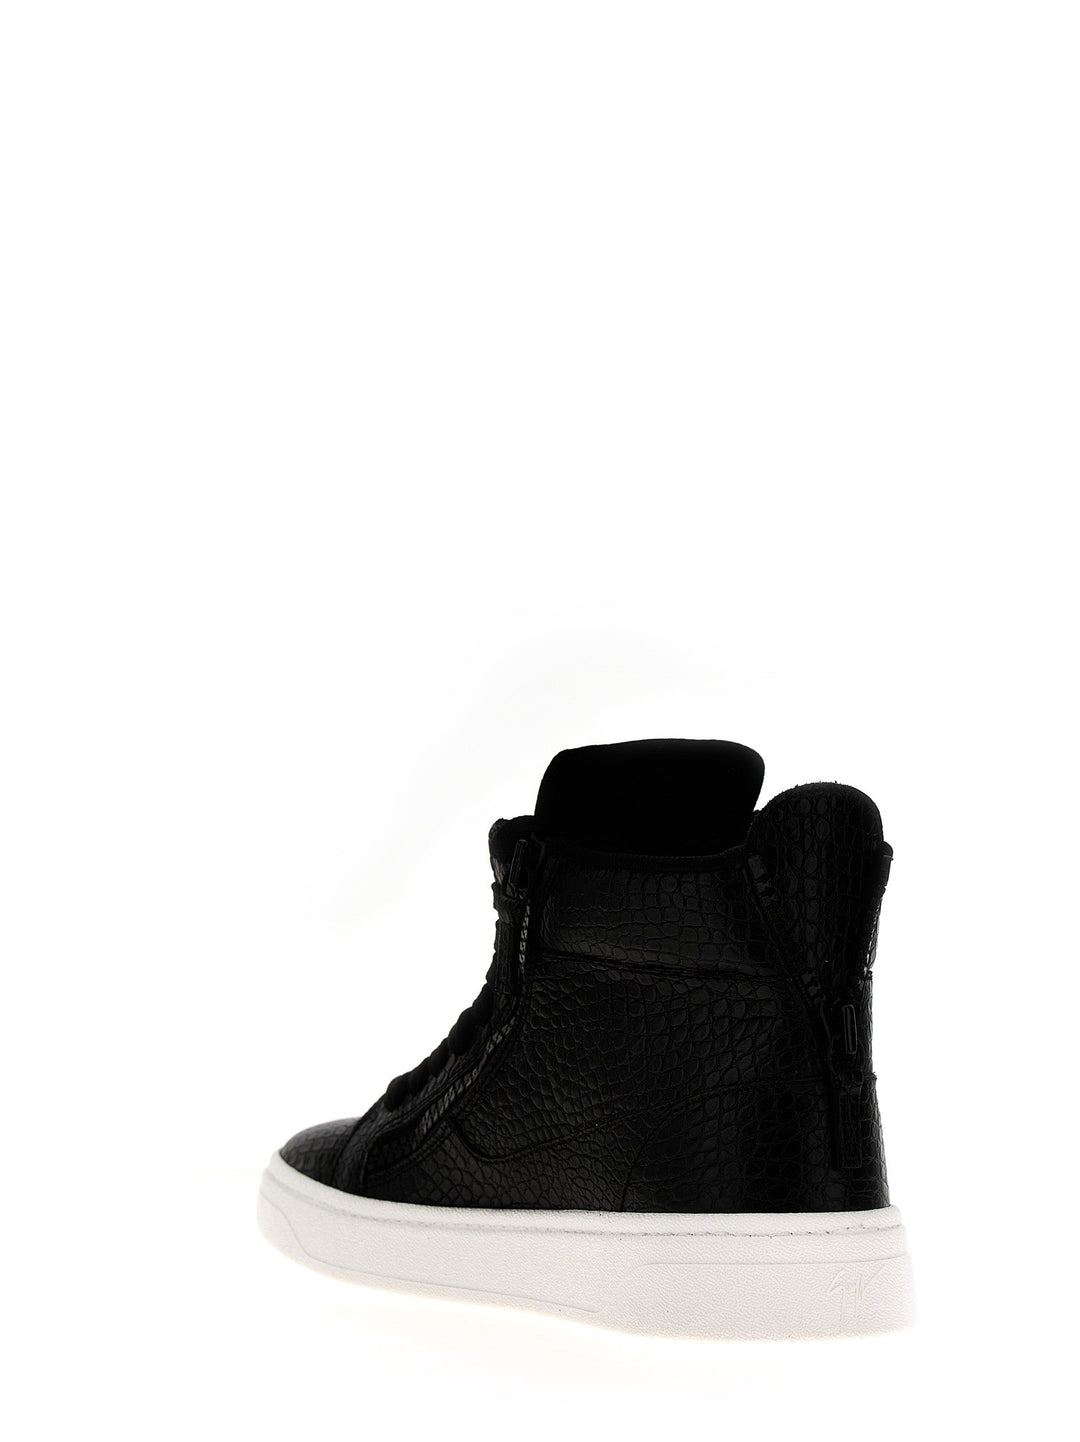 Gz/94 Sneakers Bianco/Nero